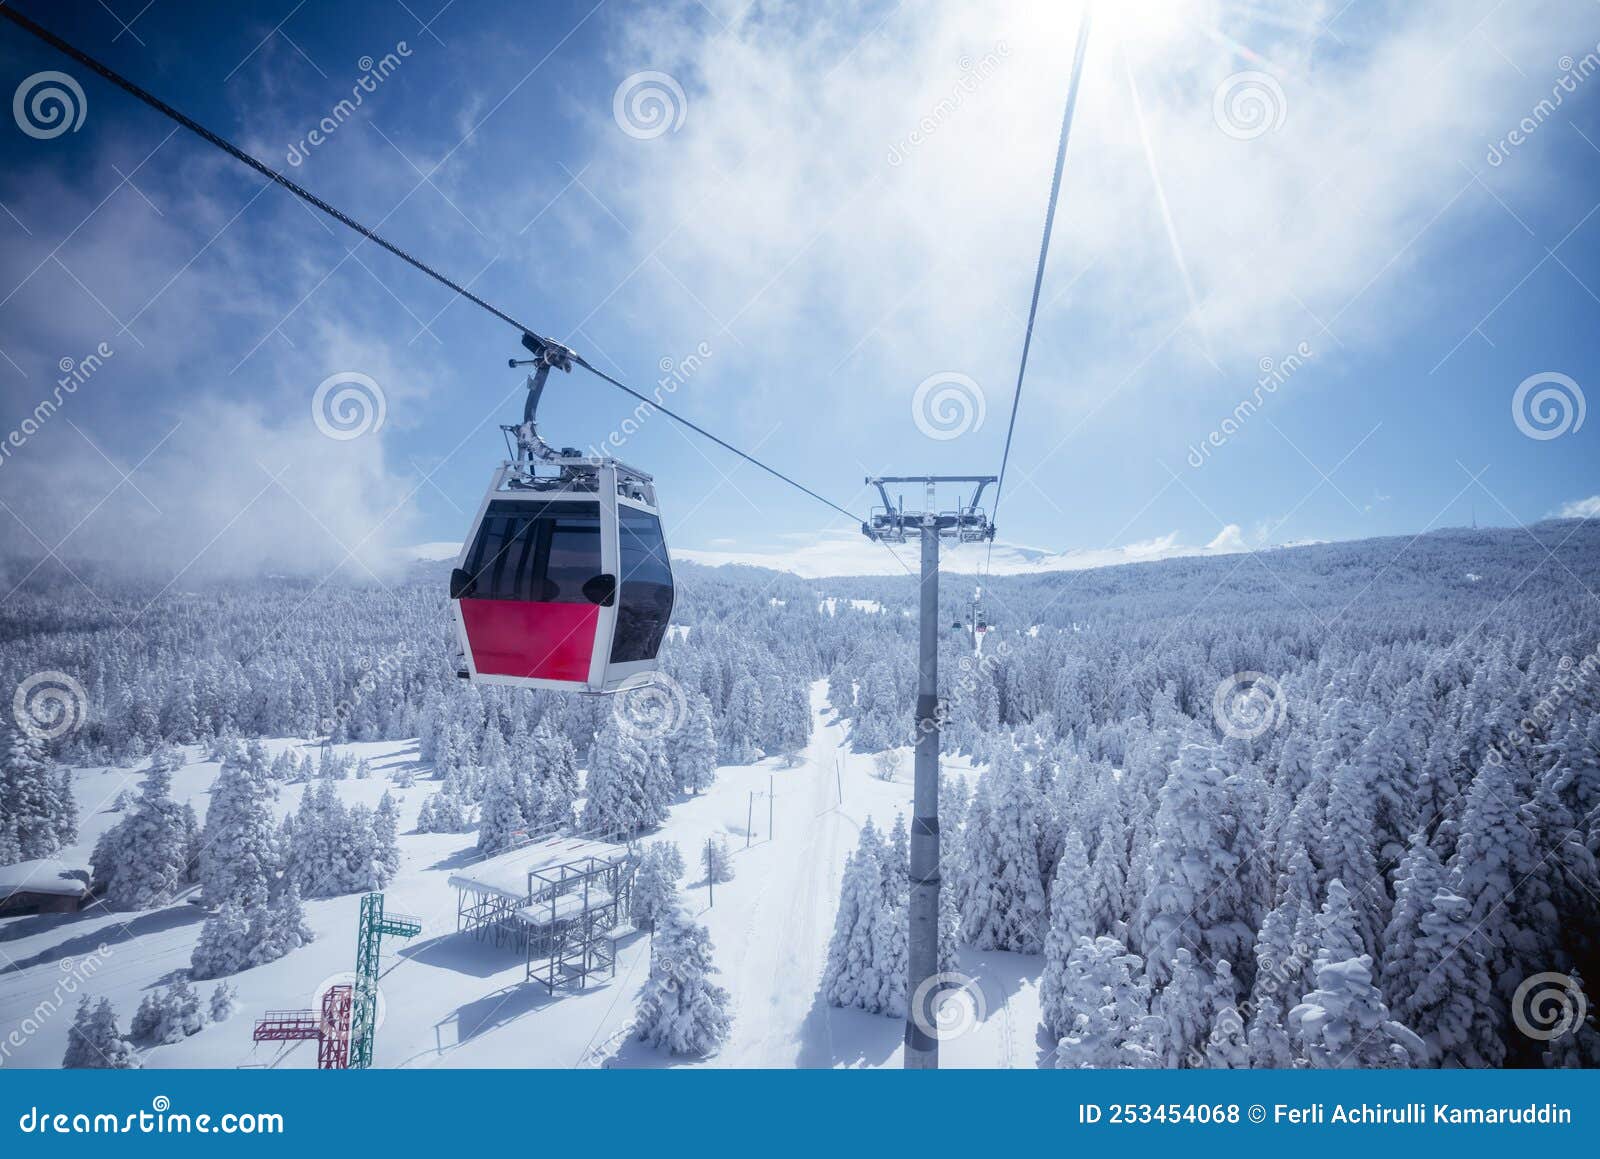 cable car way to snowy uludag mountains in bursa turkey